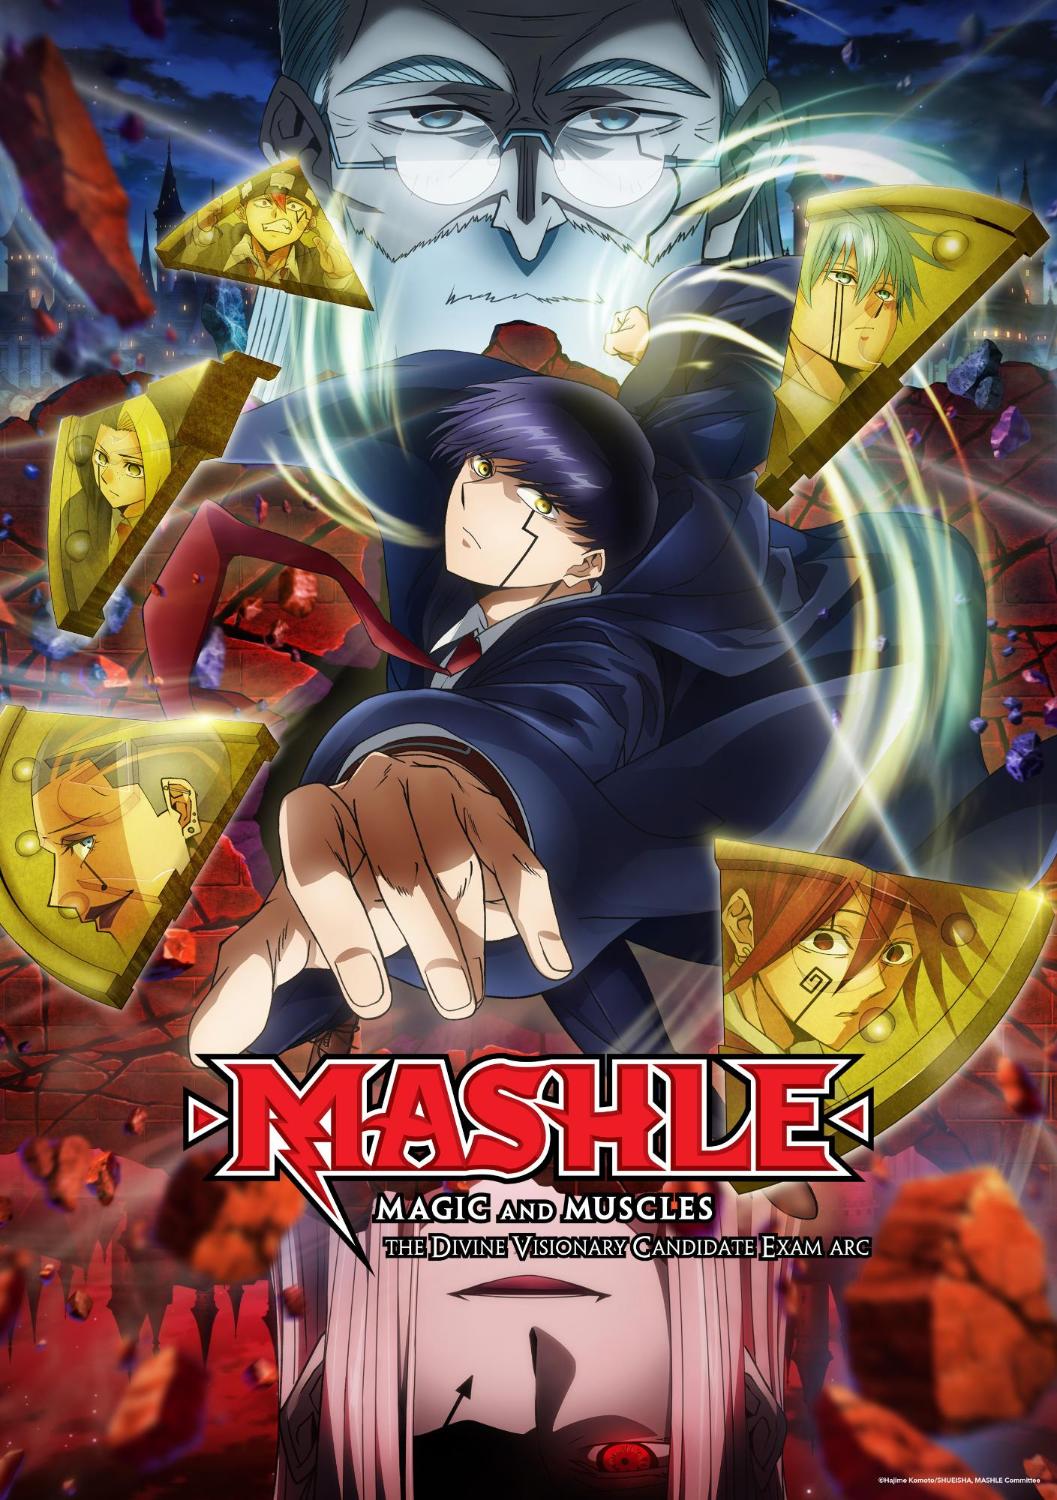 Mashle anime: English dub release date & cast - Dexerto